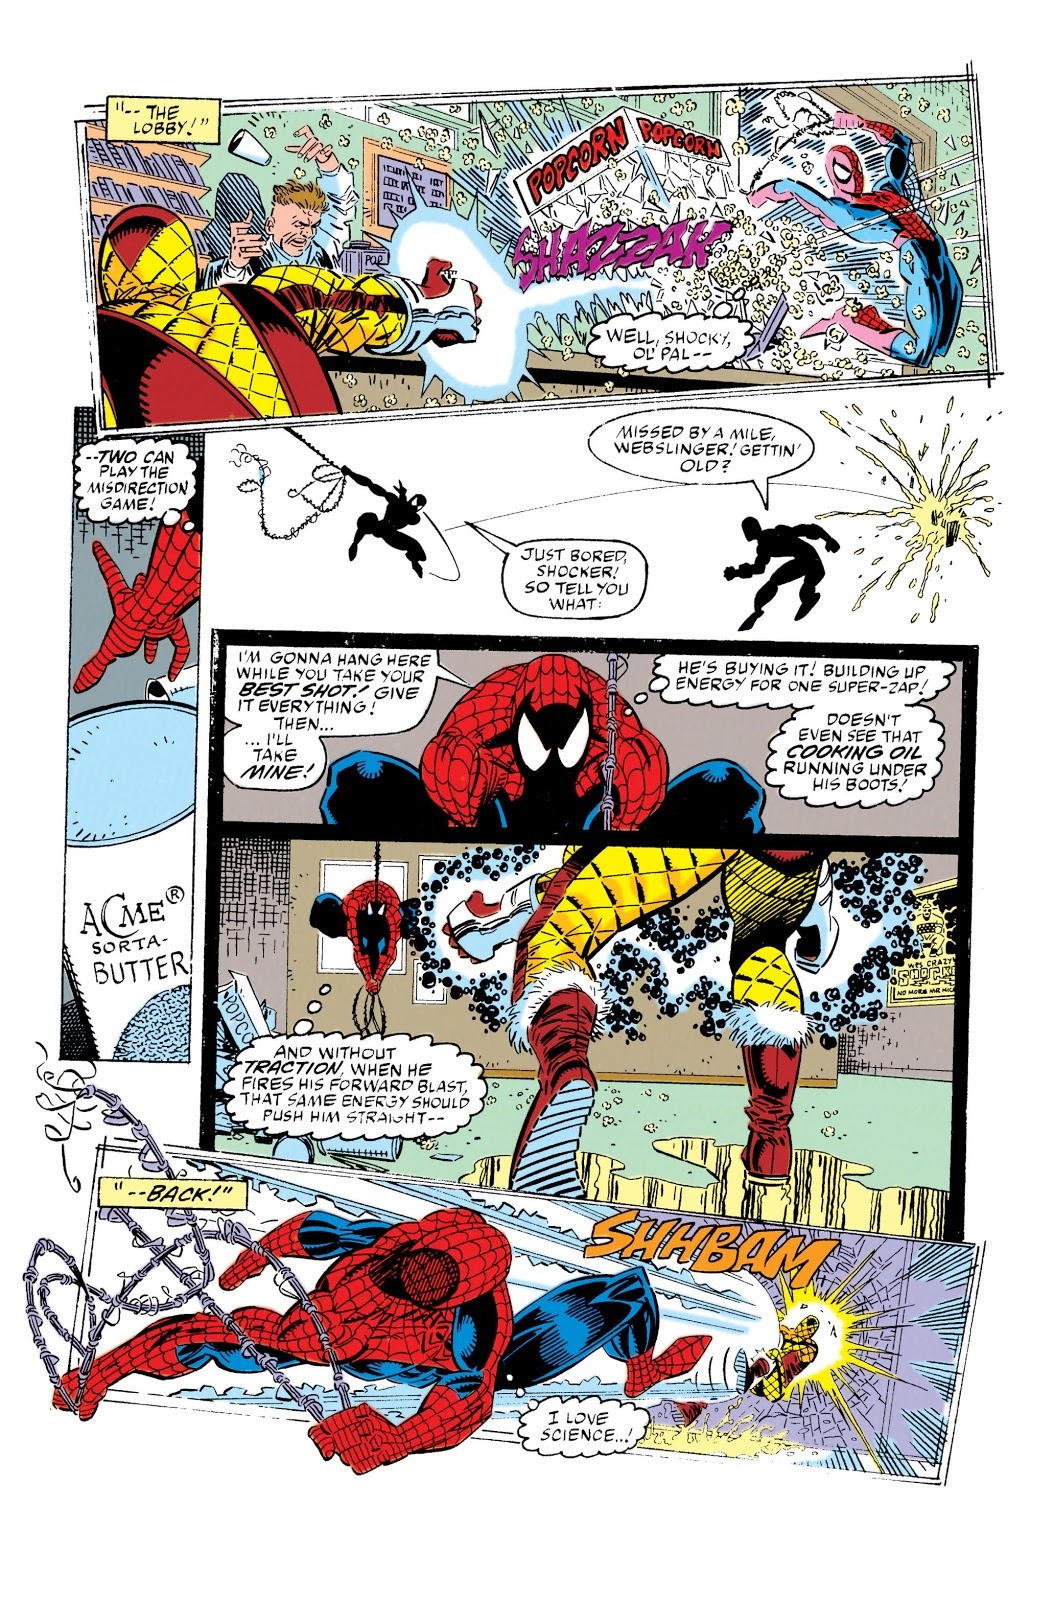 (The Amazing Spider-Man Vol. 1 #335)